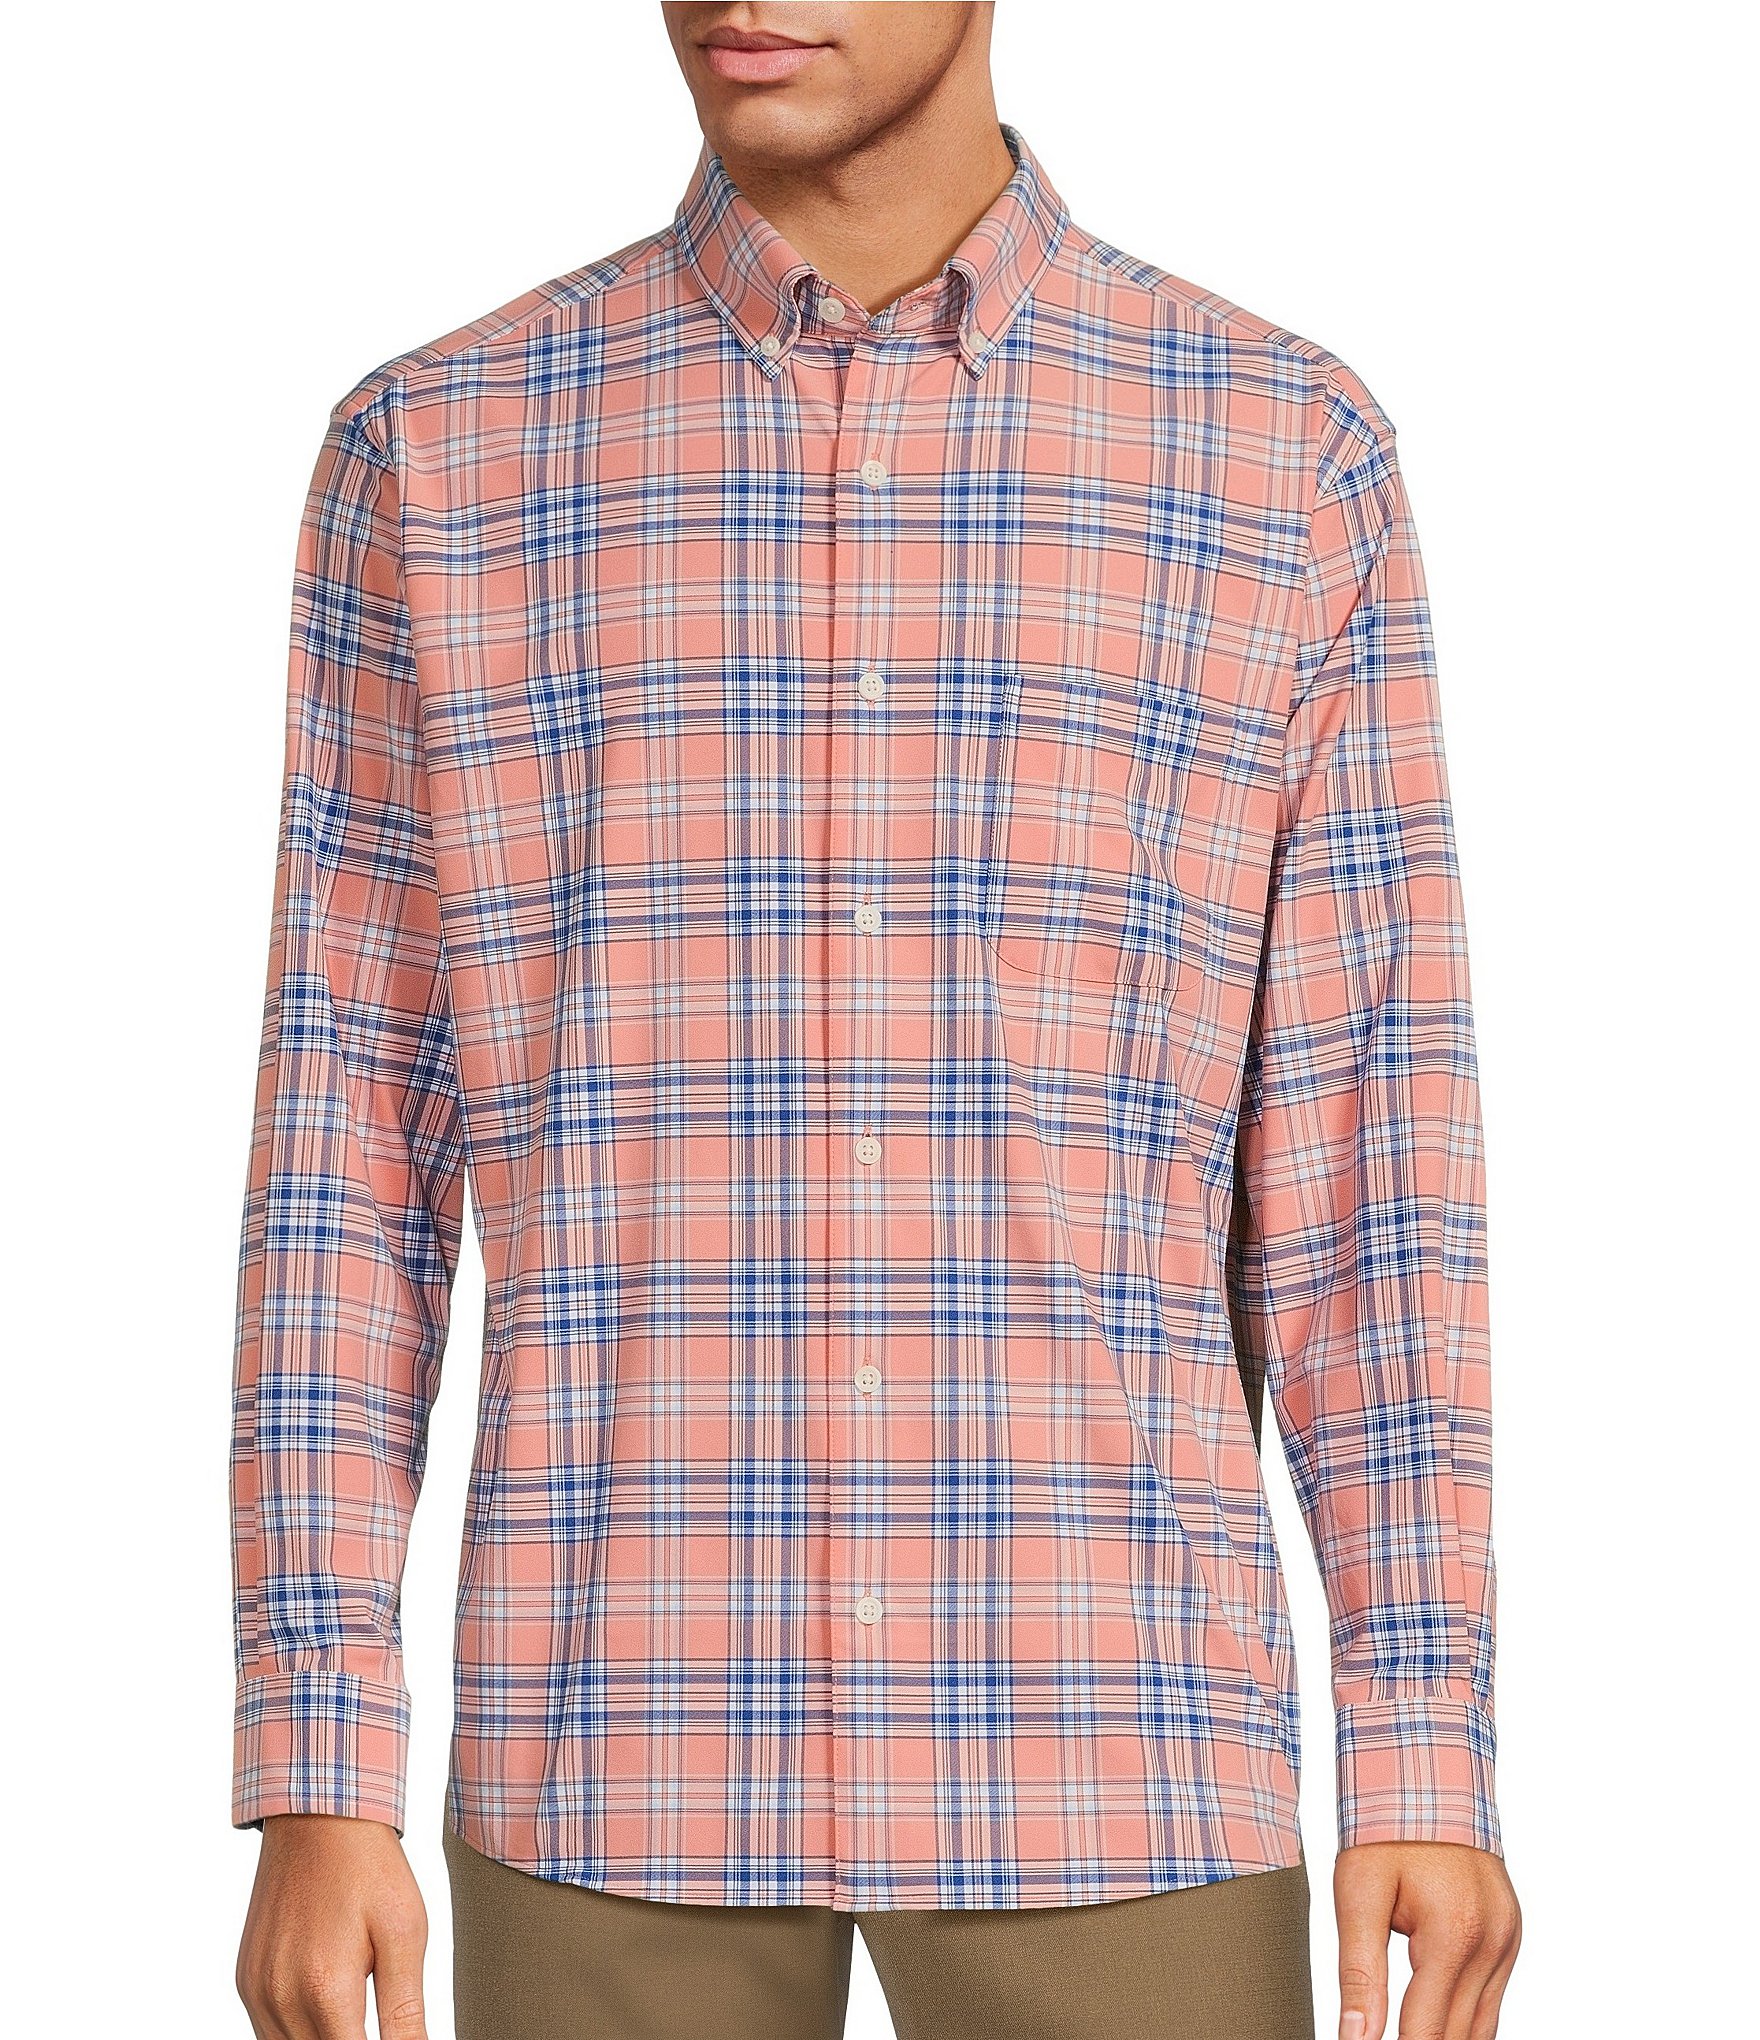 Roundtree & Yorke Brown Blue Copper Long Sleeve Button Plaid Shirt Men's XL